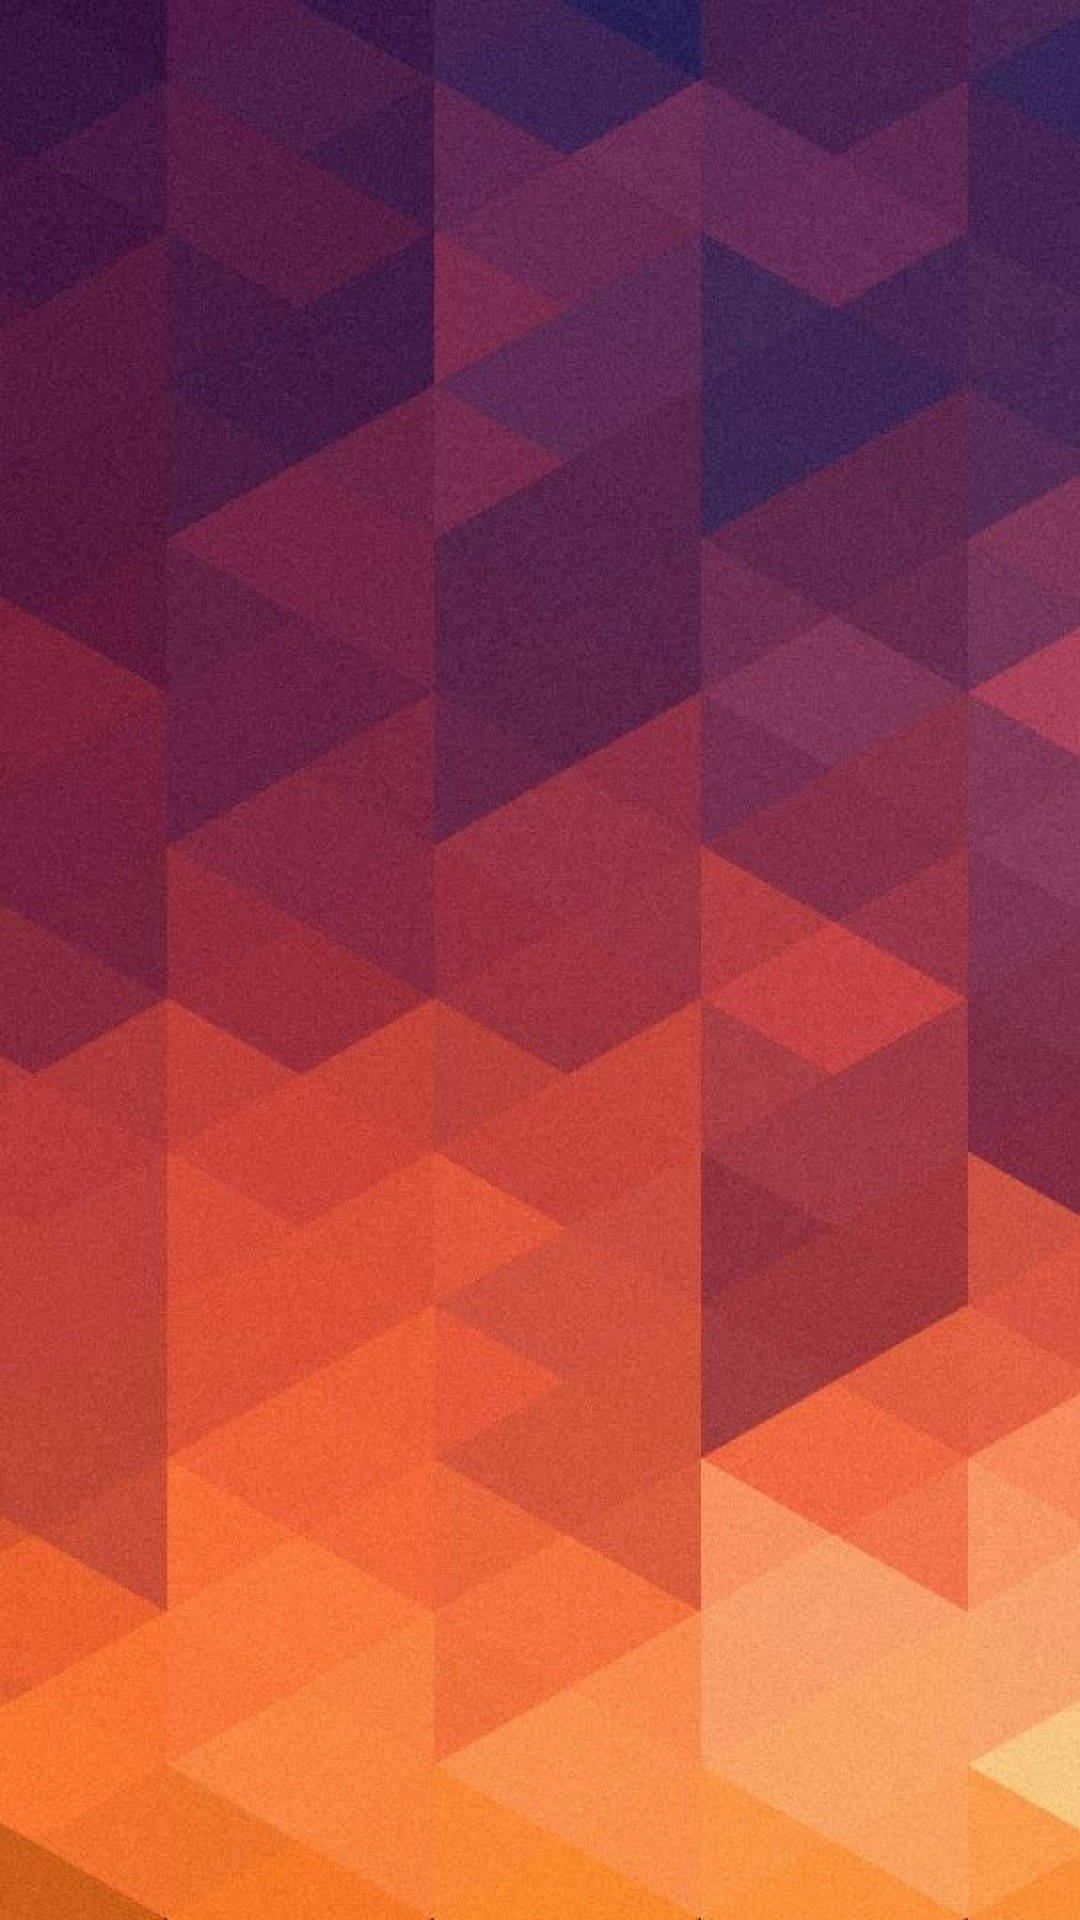 En farverig abstrakt mønster med trekanter og kvadrater Wallpaper